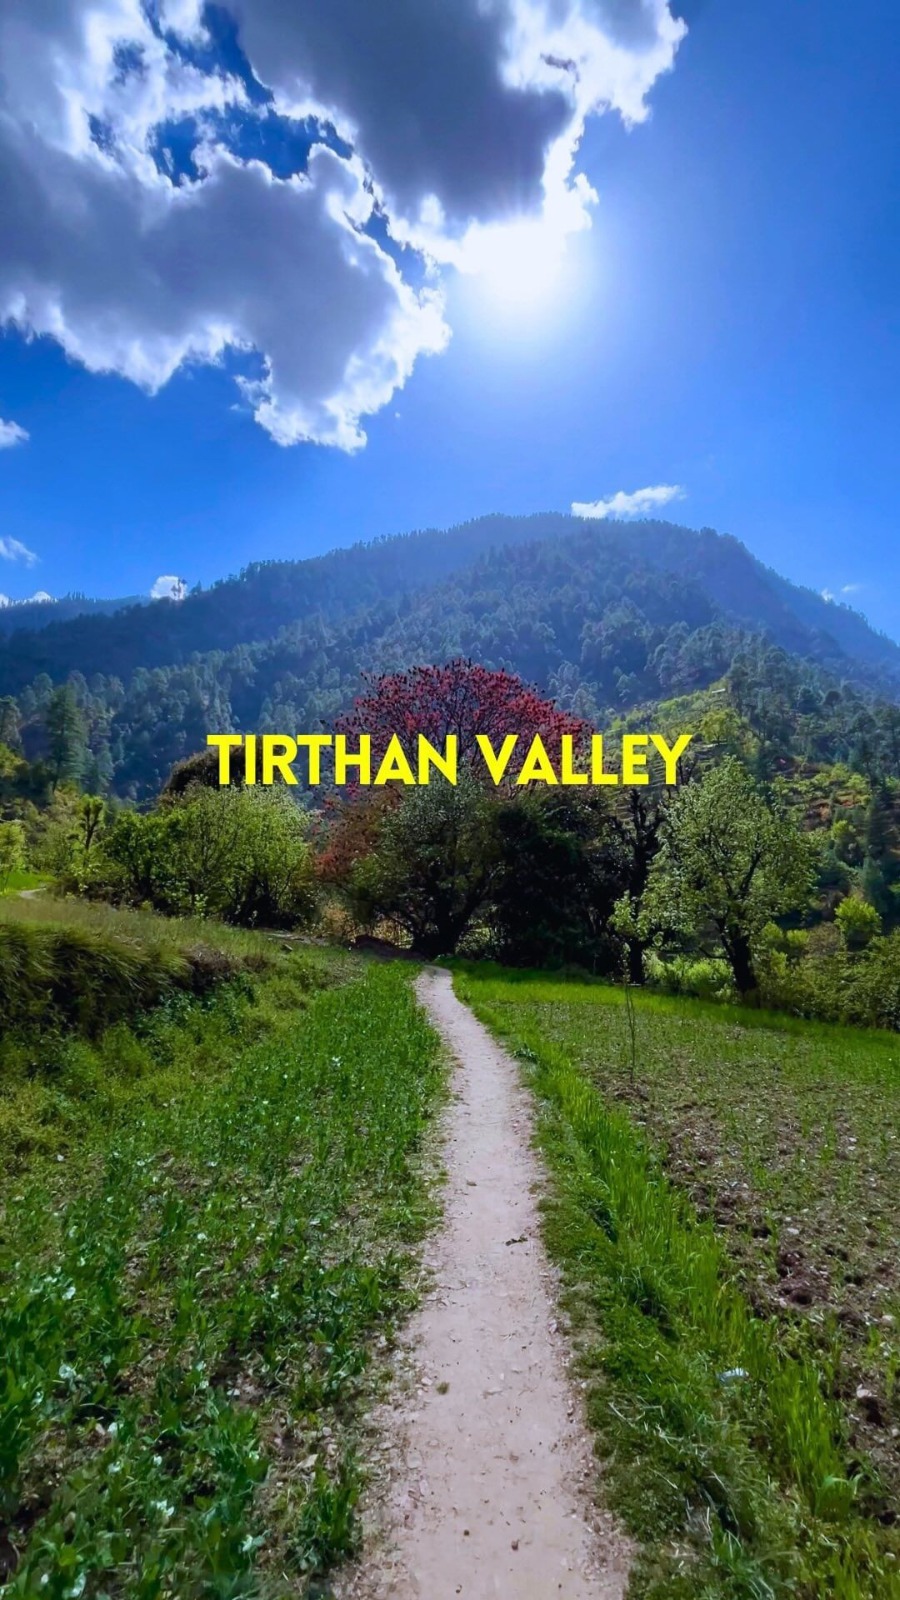 Things to do in Tirthan Valley: 1. Trekking: 2. Fishing 3. Visit Waterfalls